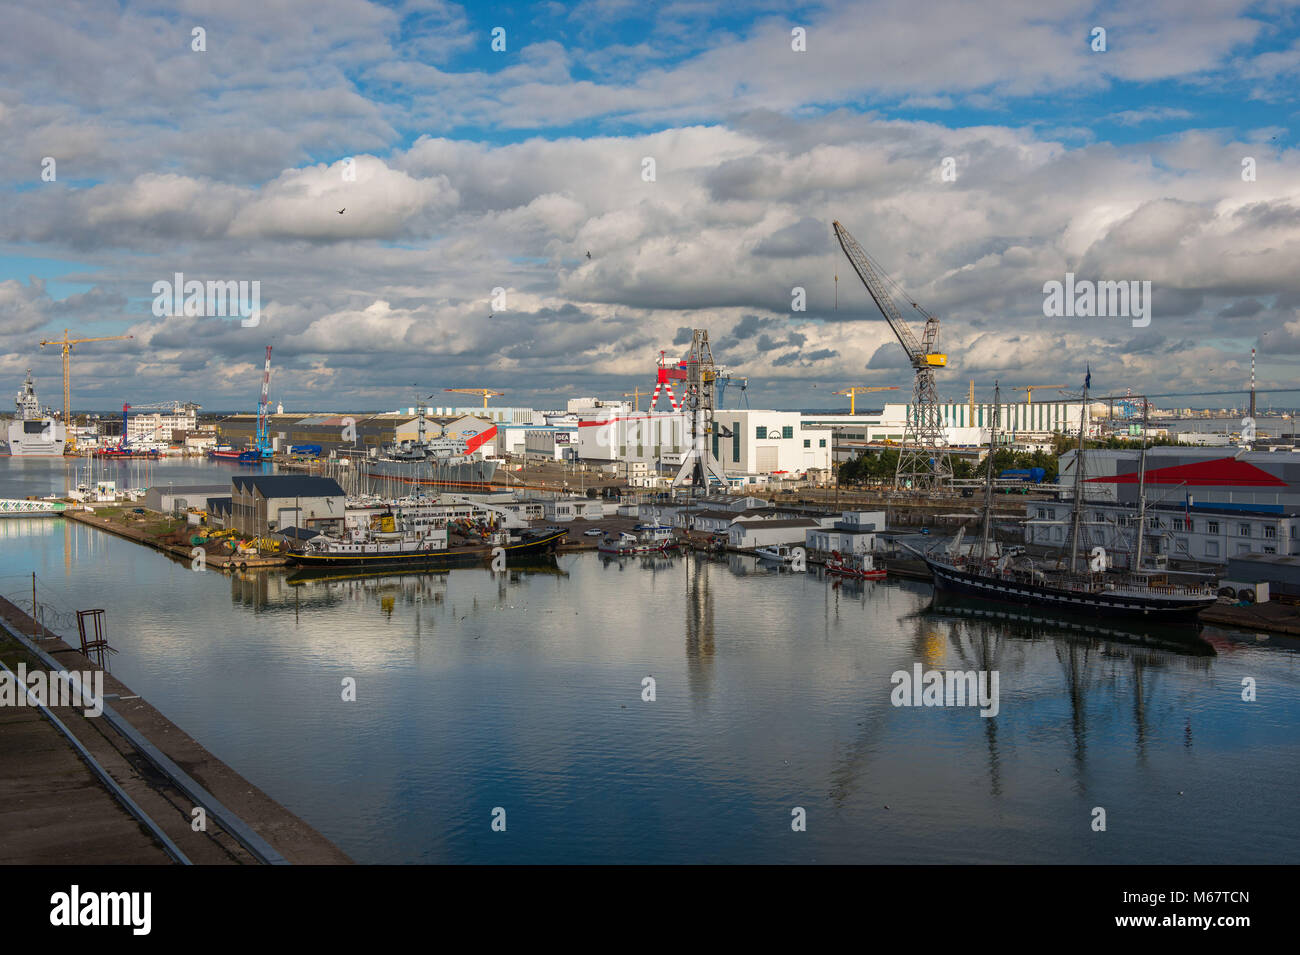 Saint Nazaire, shipyard, France. Stock Photo